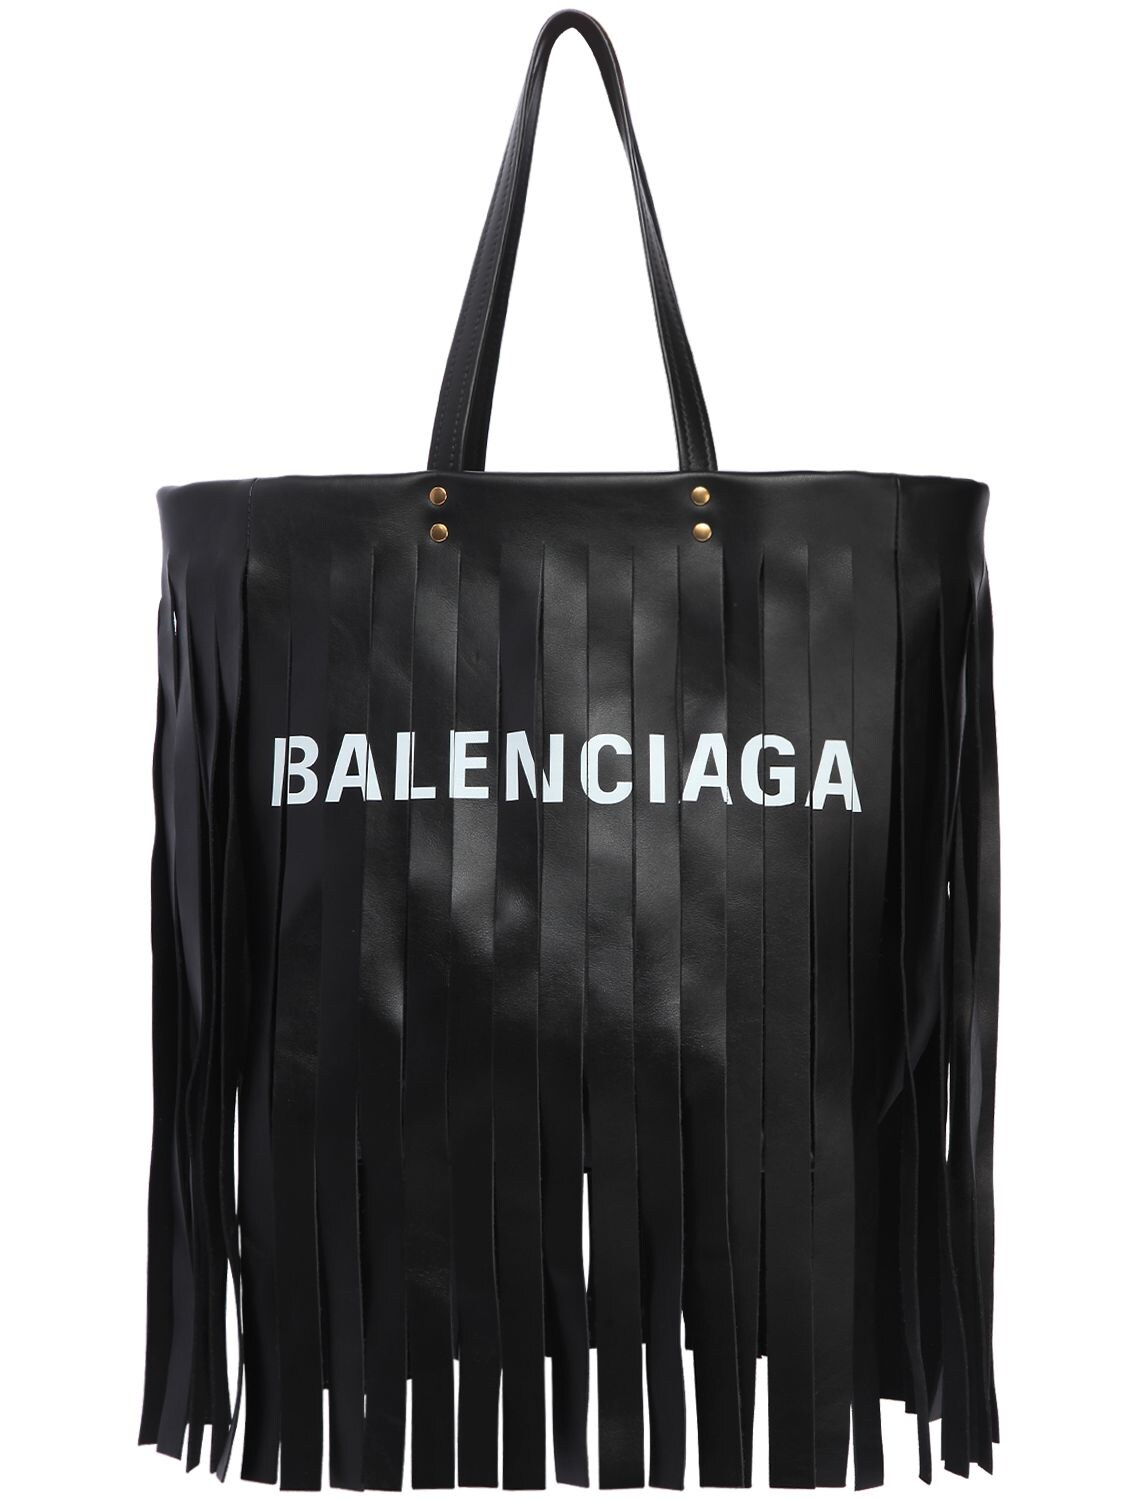 BALENCIAGA MEDIUM LAUNDRY LEATHER BAG W/ FRINGE,67IWD2016-MTA2MA2